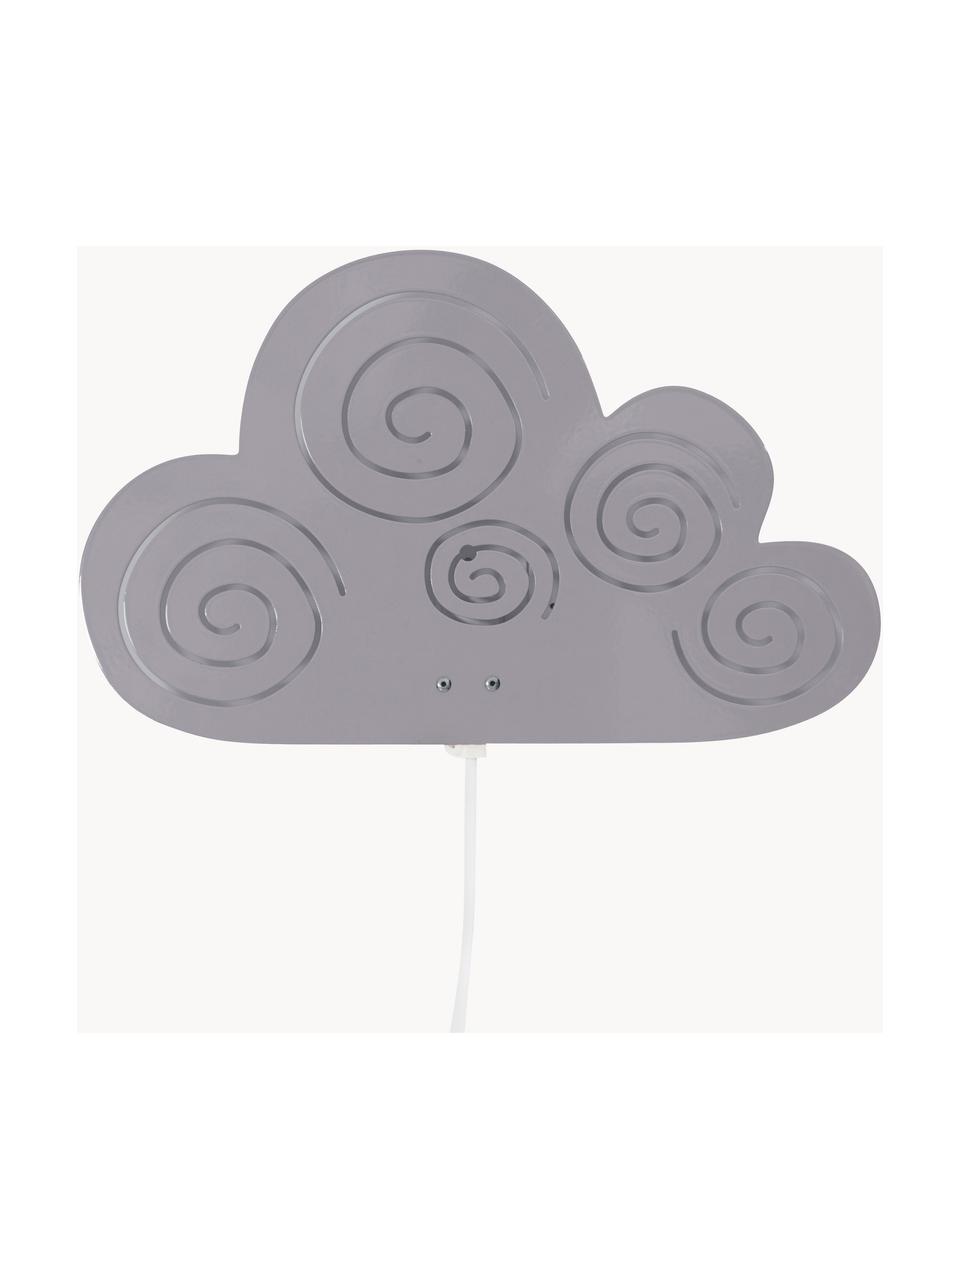 Wandleuchte Cloud in Wolken-Form, Grau, B 33 x H 21 cm